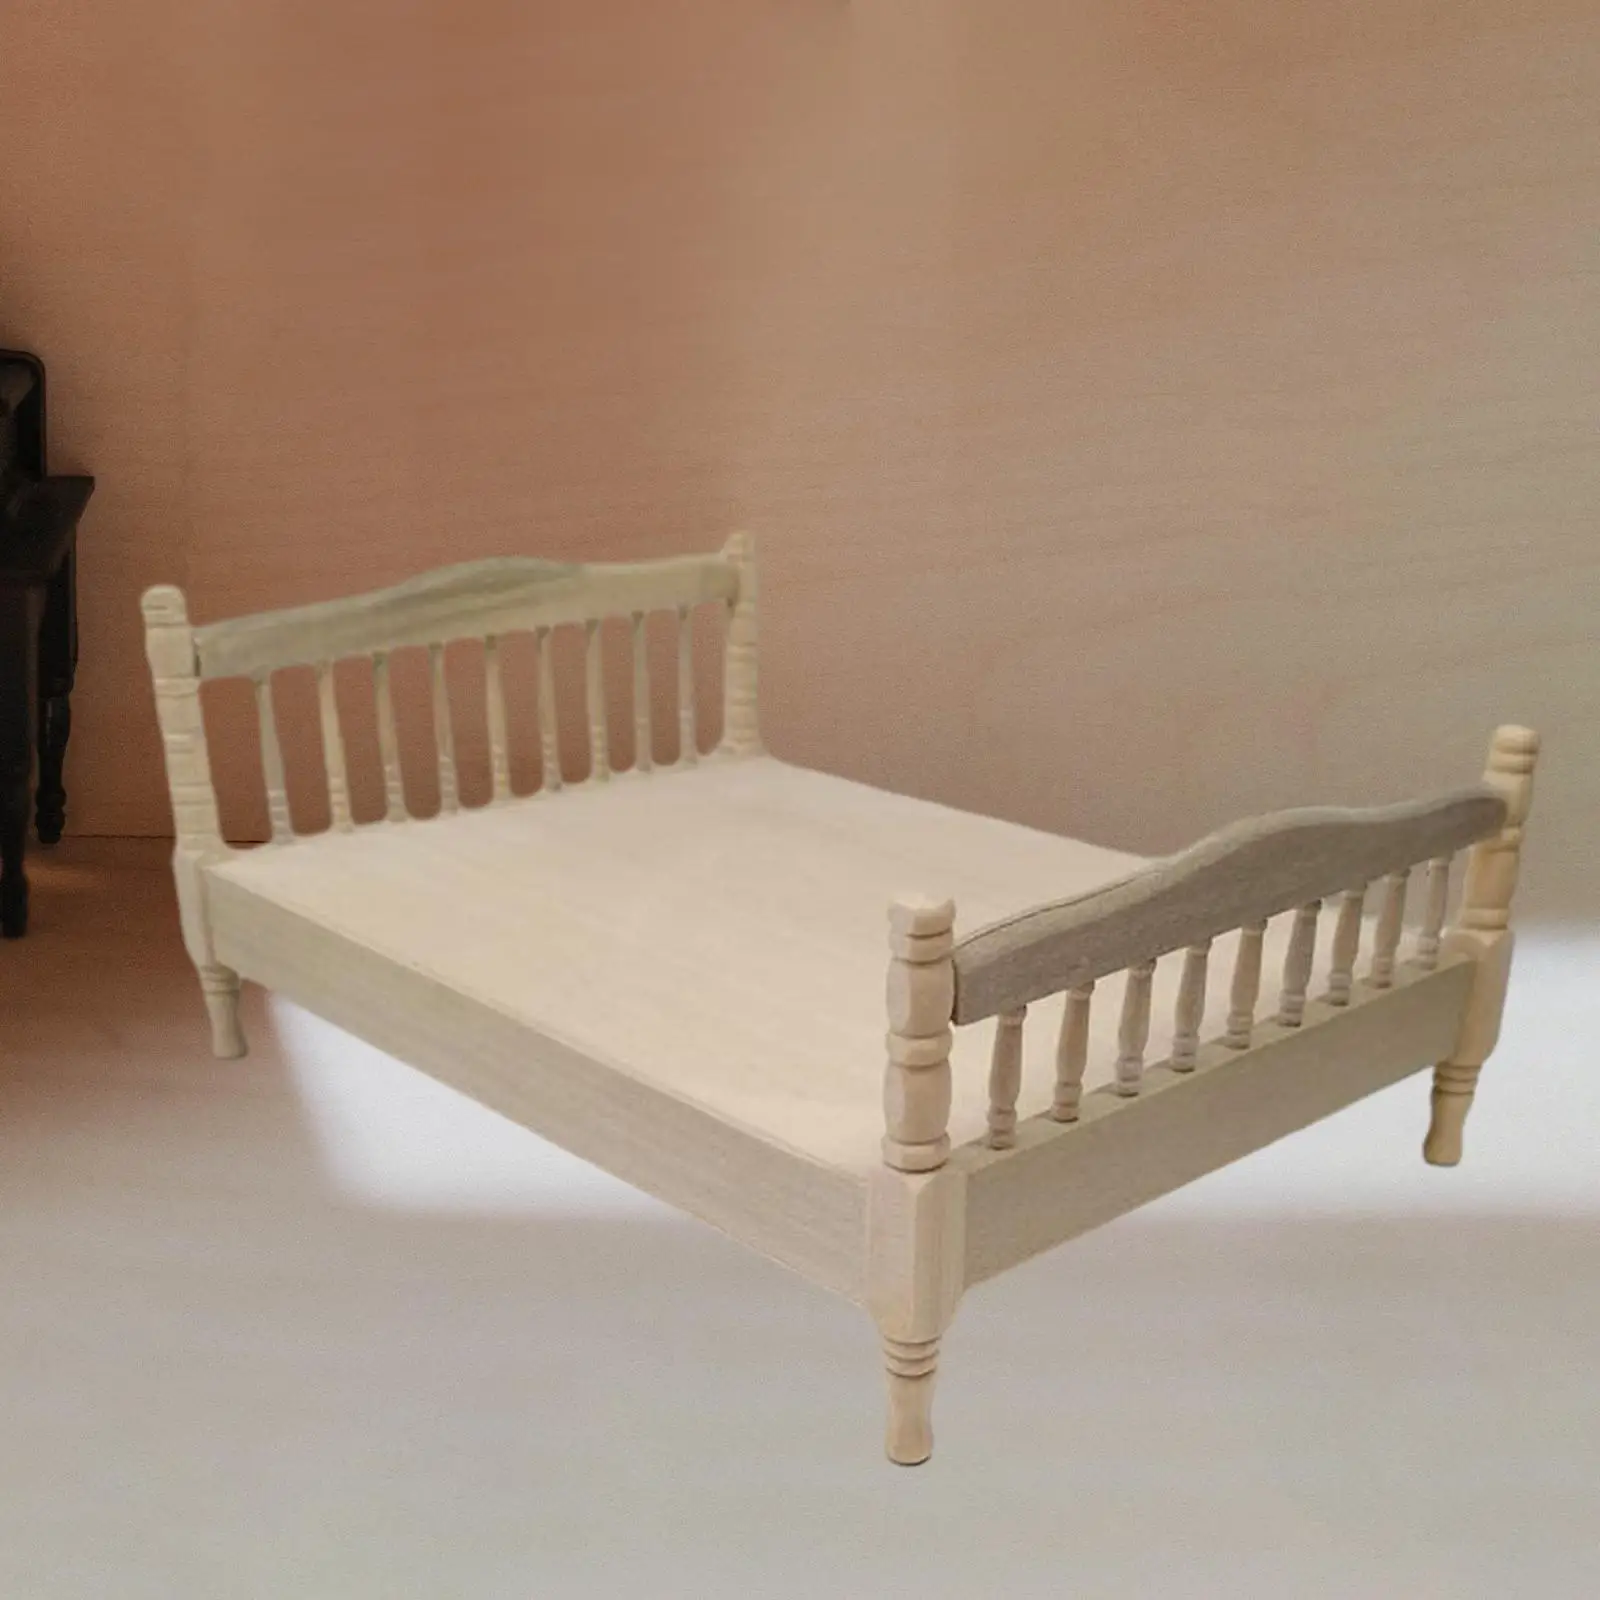 1:12 European Double Bed Model, Miniature Bedroom Furniture Scenes, Wooden Mini Bed, Wooden Bed Model for DIY Scenery